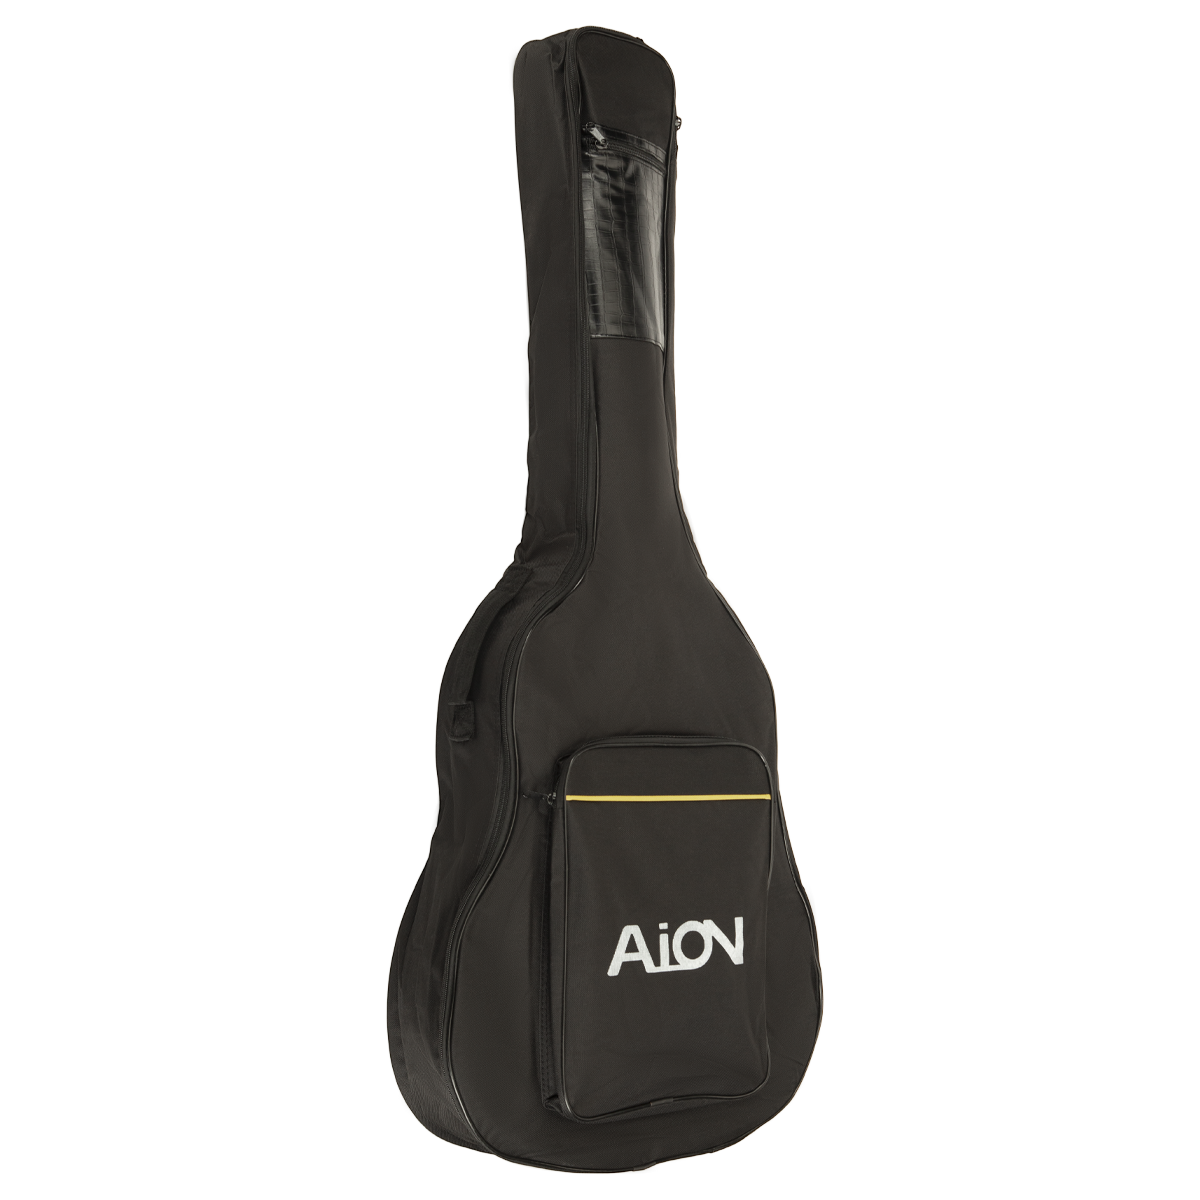 Aion Qb-mb-5mm-41 black Чехол для акустической гитары 41'' с утеплителем 5мм